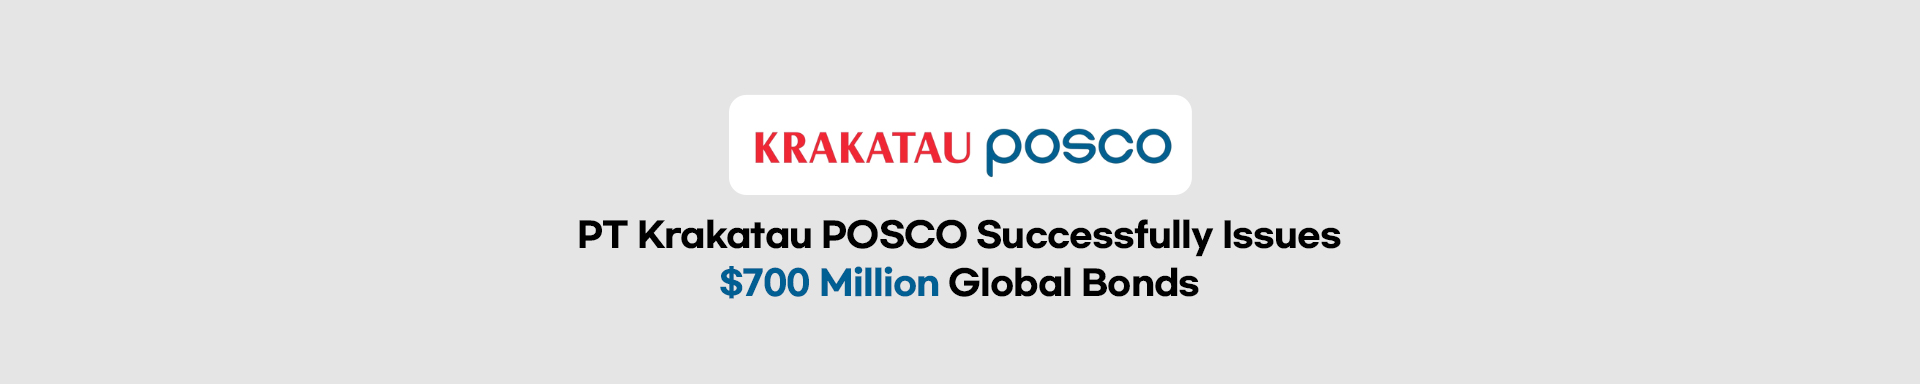 PT Krakatau POSCO Successfully Issues $700 Million Global Bonds